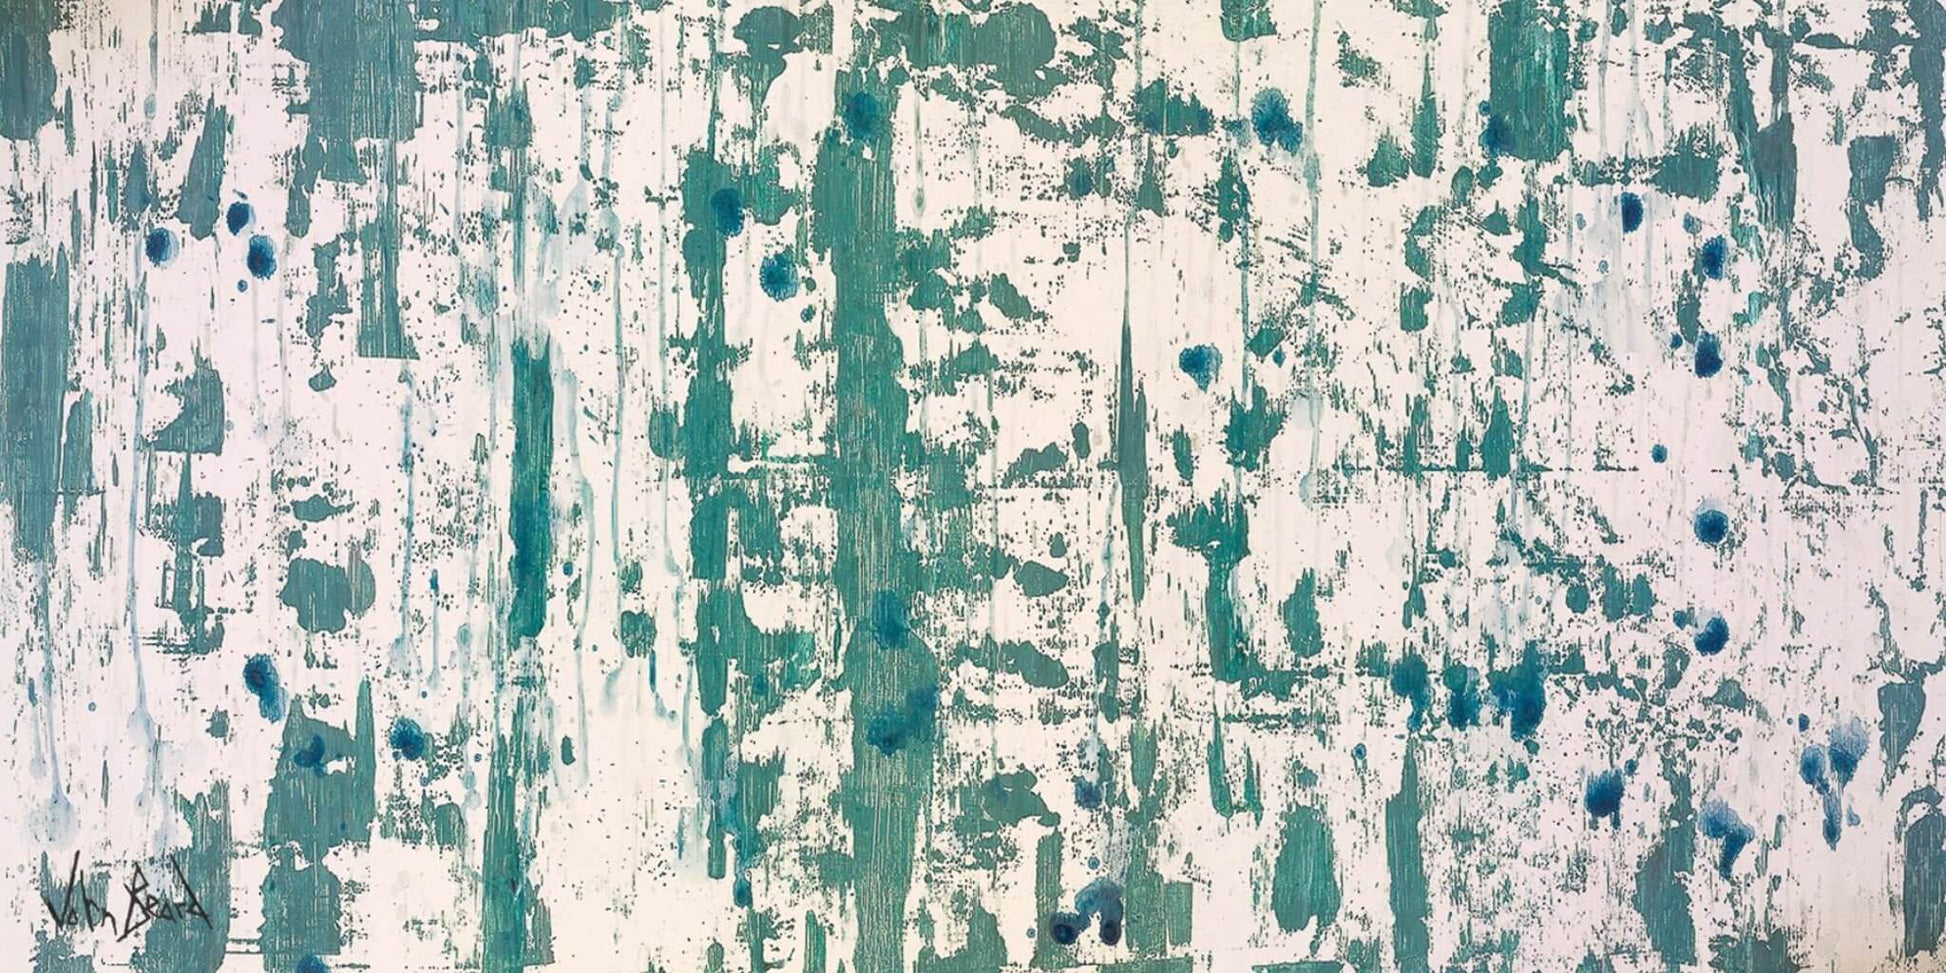 Abstract Art Blue On Green 2 John Beard Collection